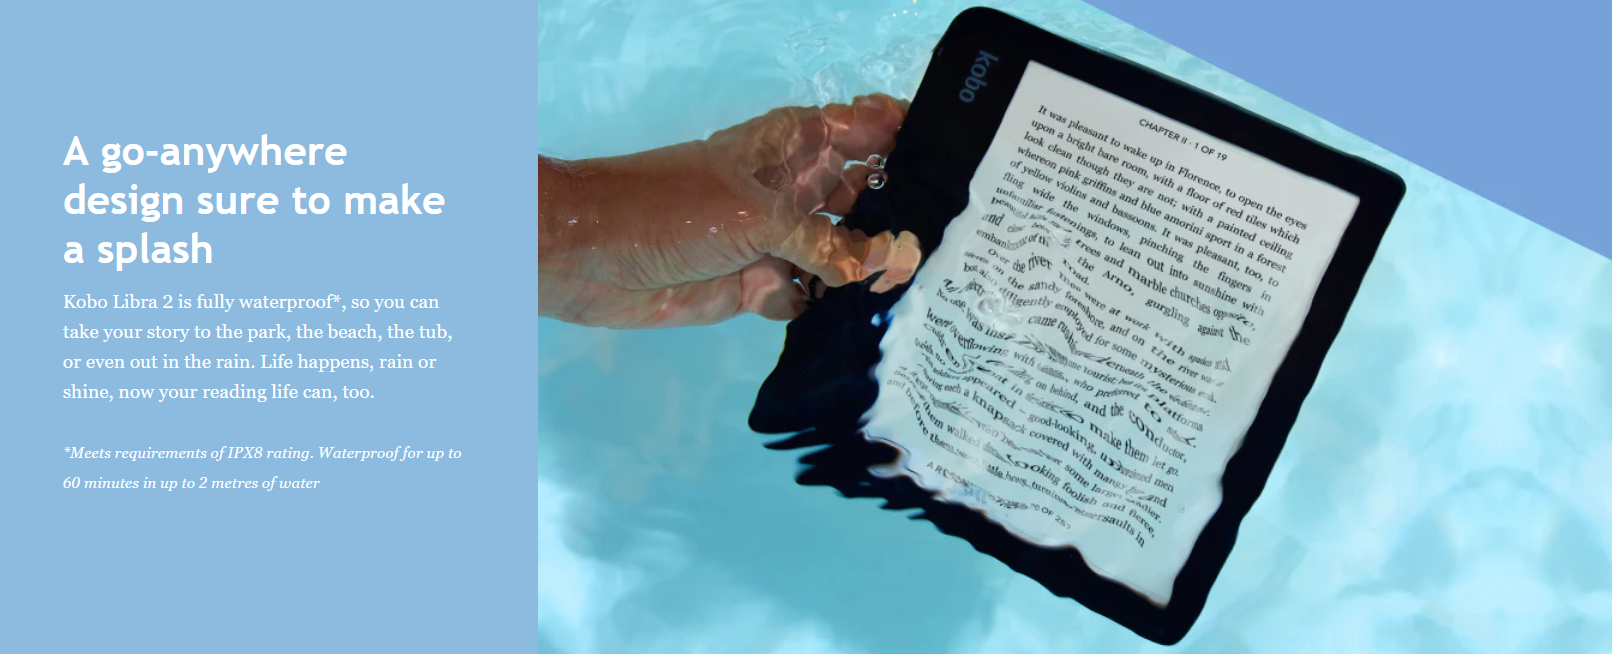 Kobo Libra 2 now comes with a sleep cover case for 50% off - Good e-Reader